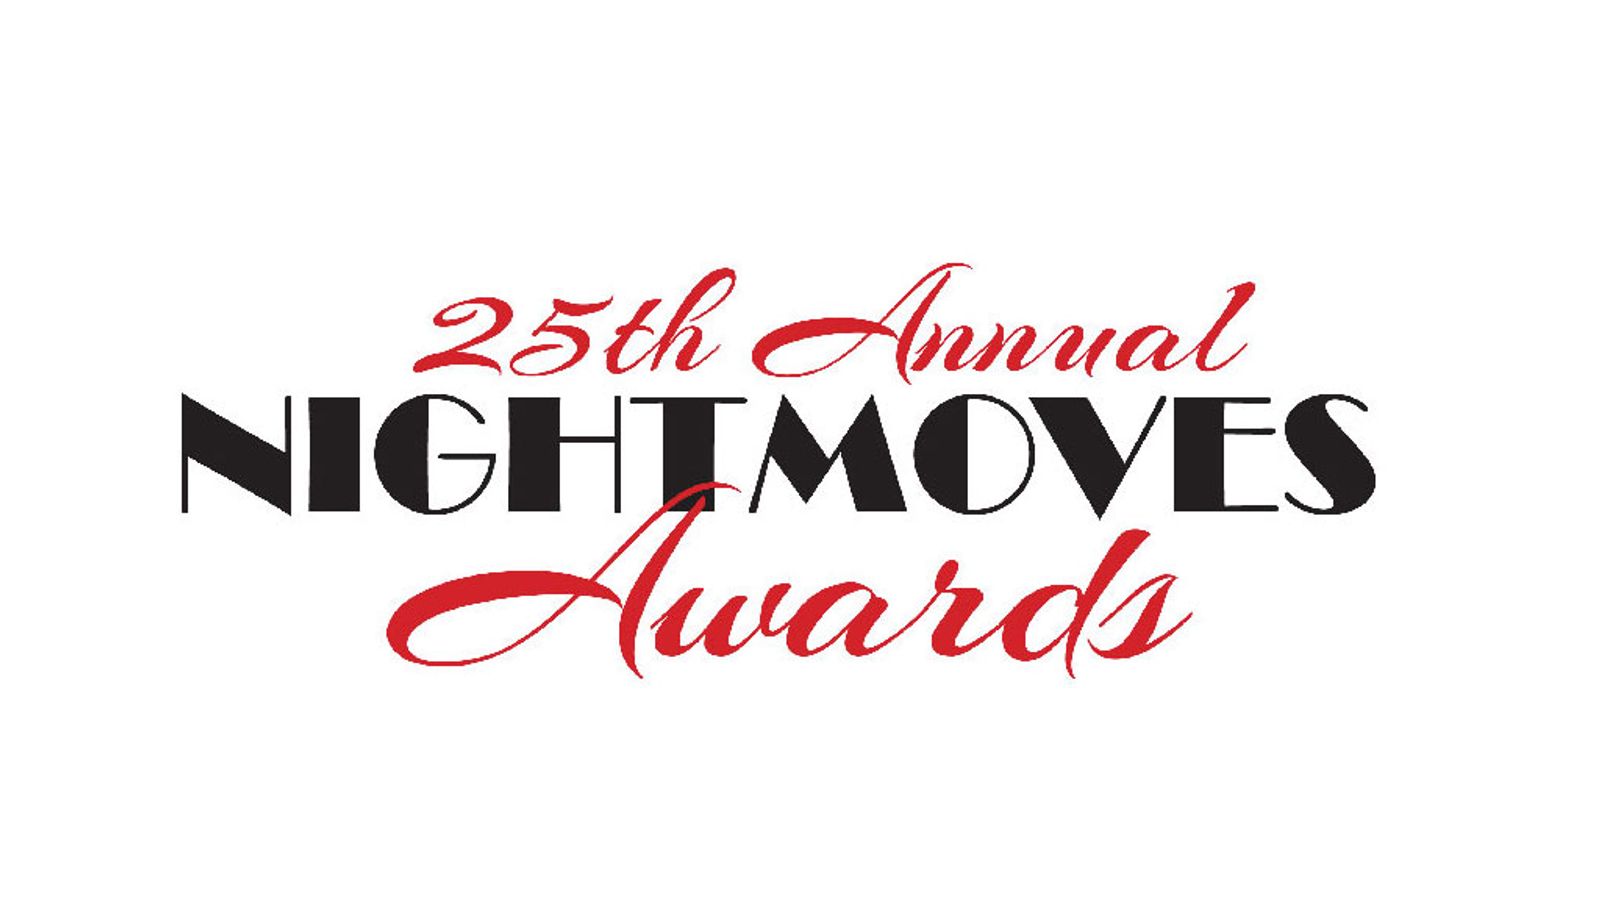 Winners Of 25th Annual NightMoves Awards Winners Announced